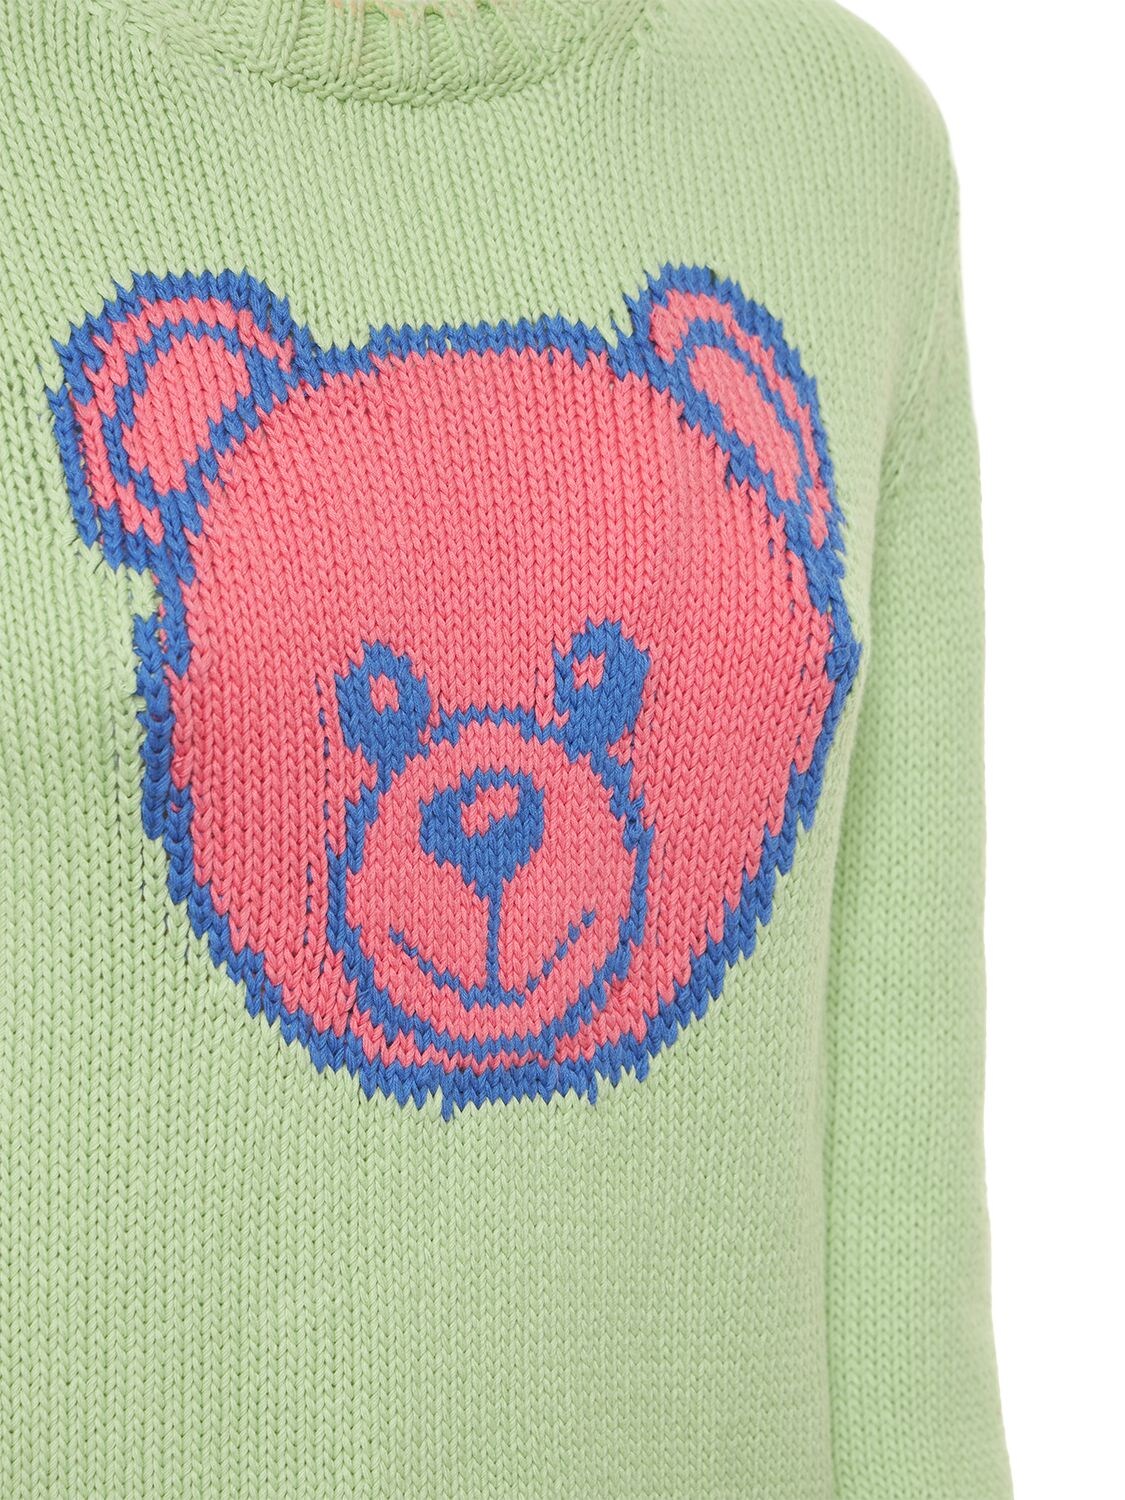 Neomai Vintage Top Stitch Teddy Bear Crewneck